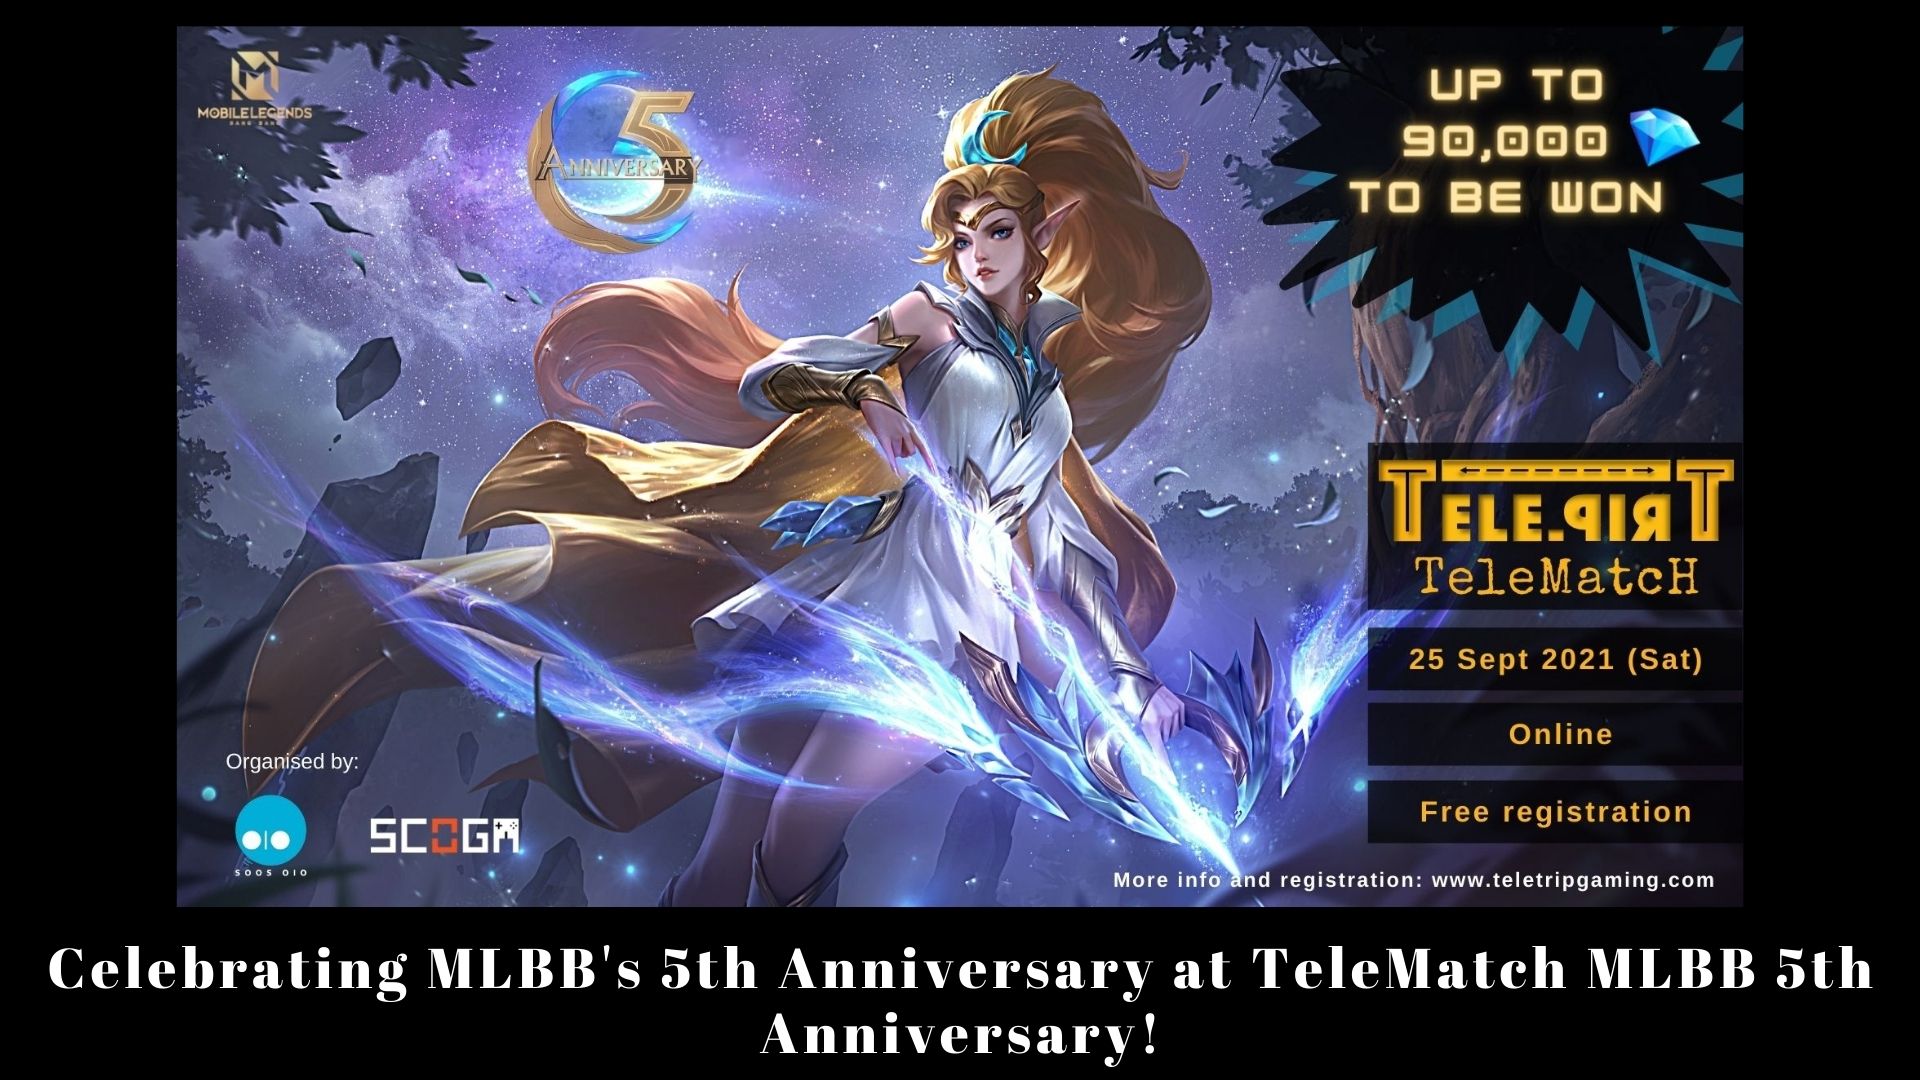 Celebrating MLBB's 5th Anniversary at TeleMatch MLBB 5th Anniversary!